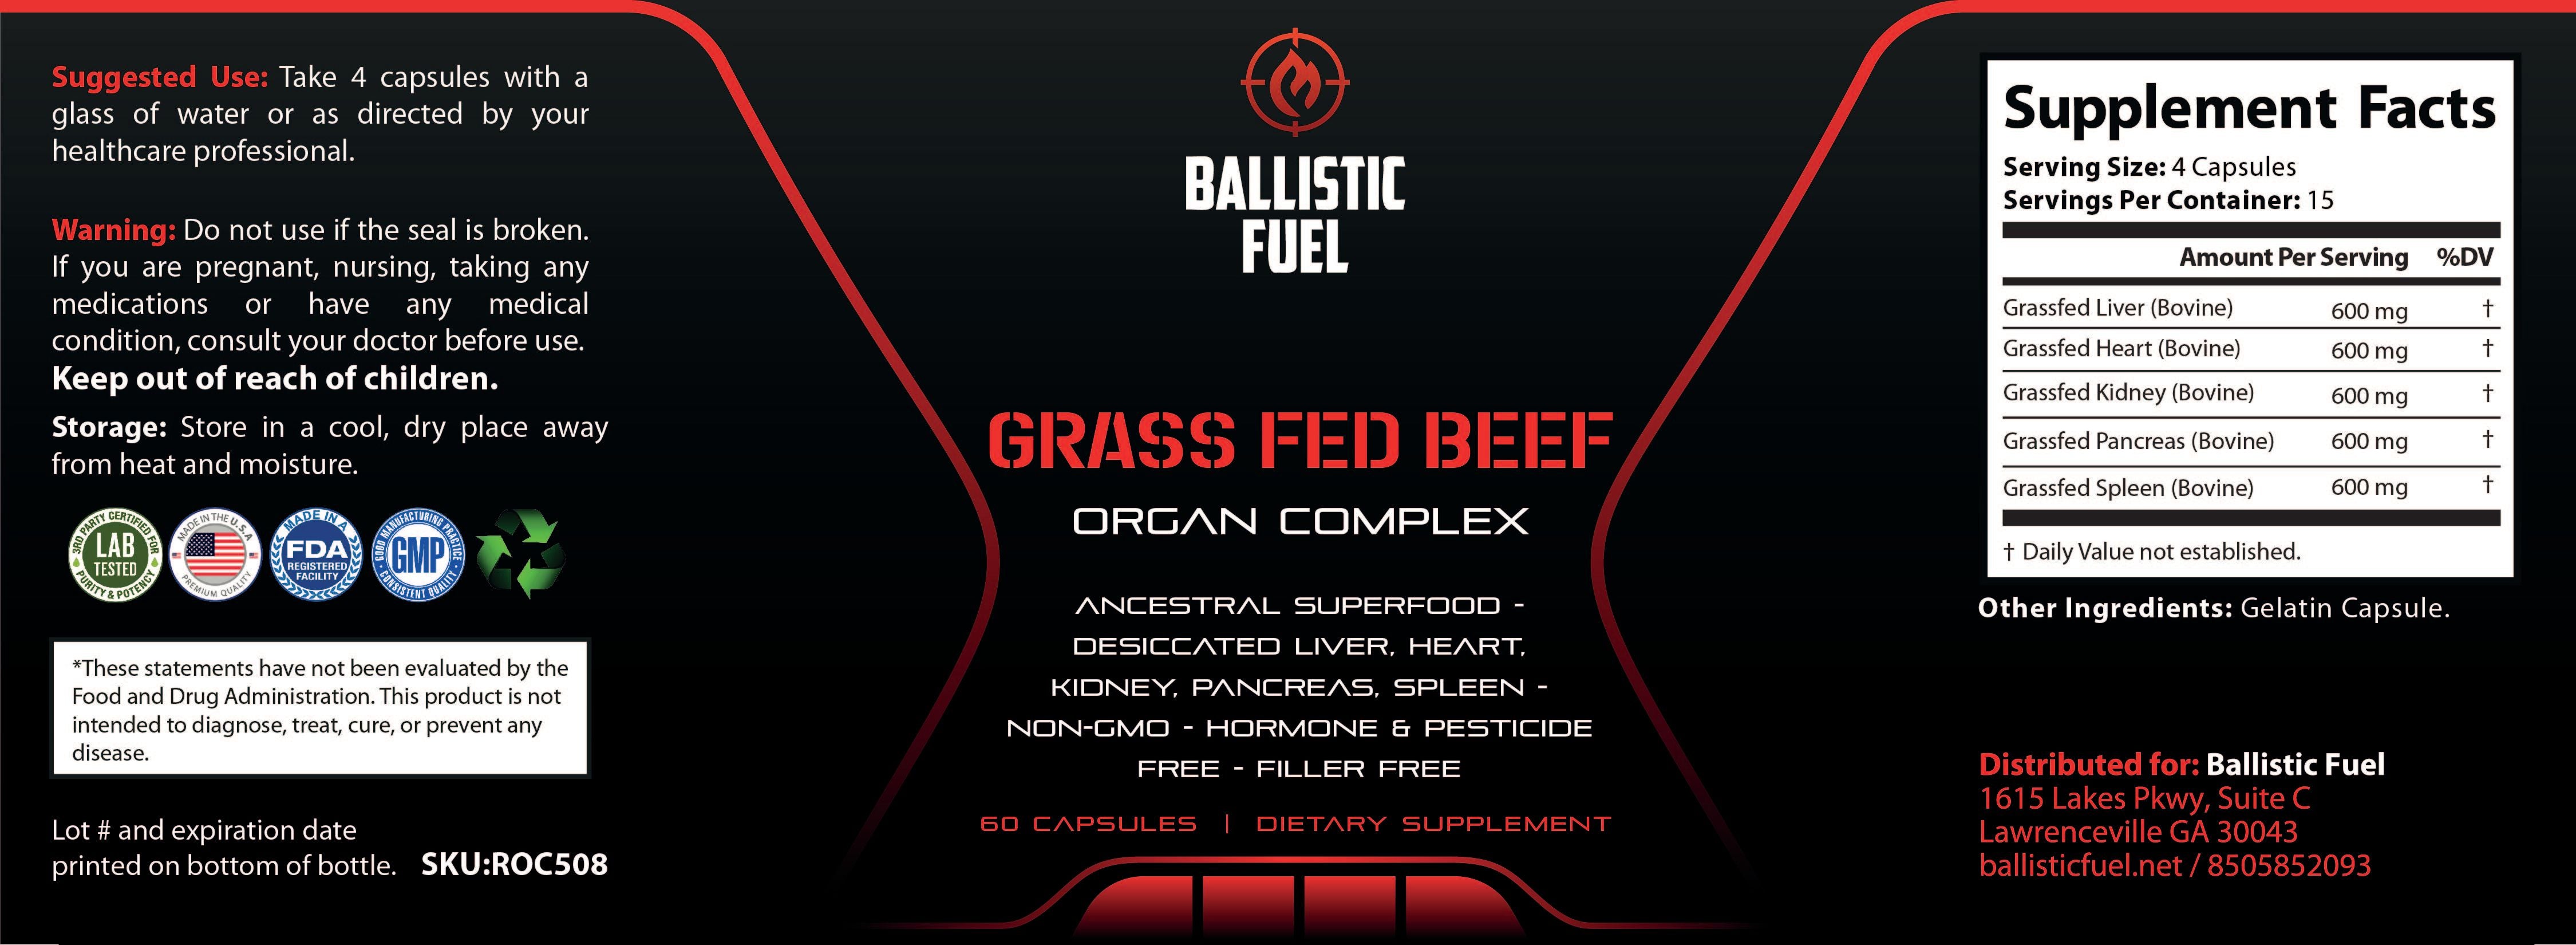 Grass-Fed Beef Organ Complex